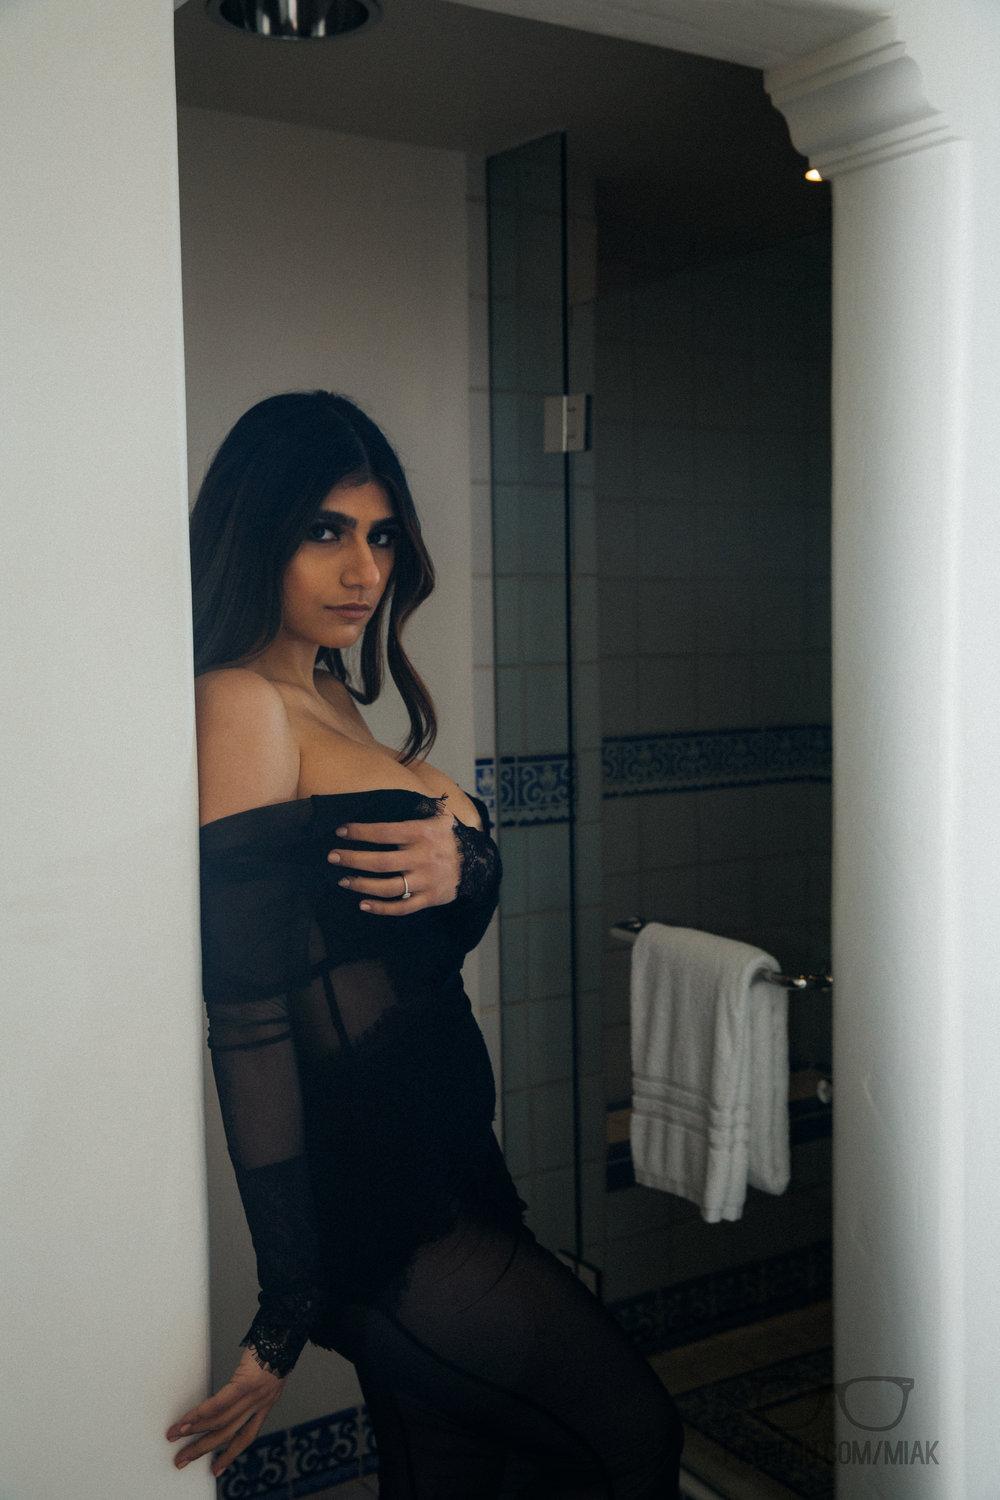 Watch Latest Mia Khalifa Sexy Lingerie Tease Photoshoot Set Leaked – LeakedVideo.org – Free Download Leaked Sextape, XXX, Porn, Sex Videos, Nude Leaks